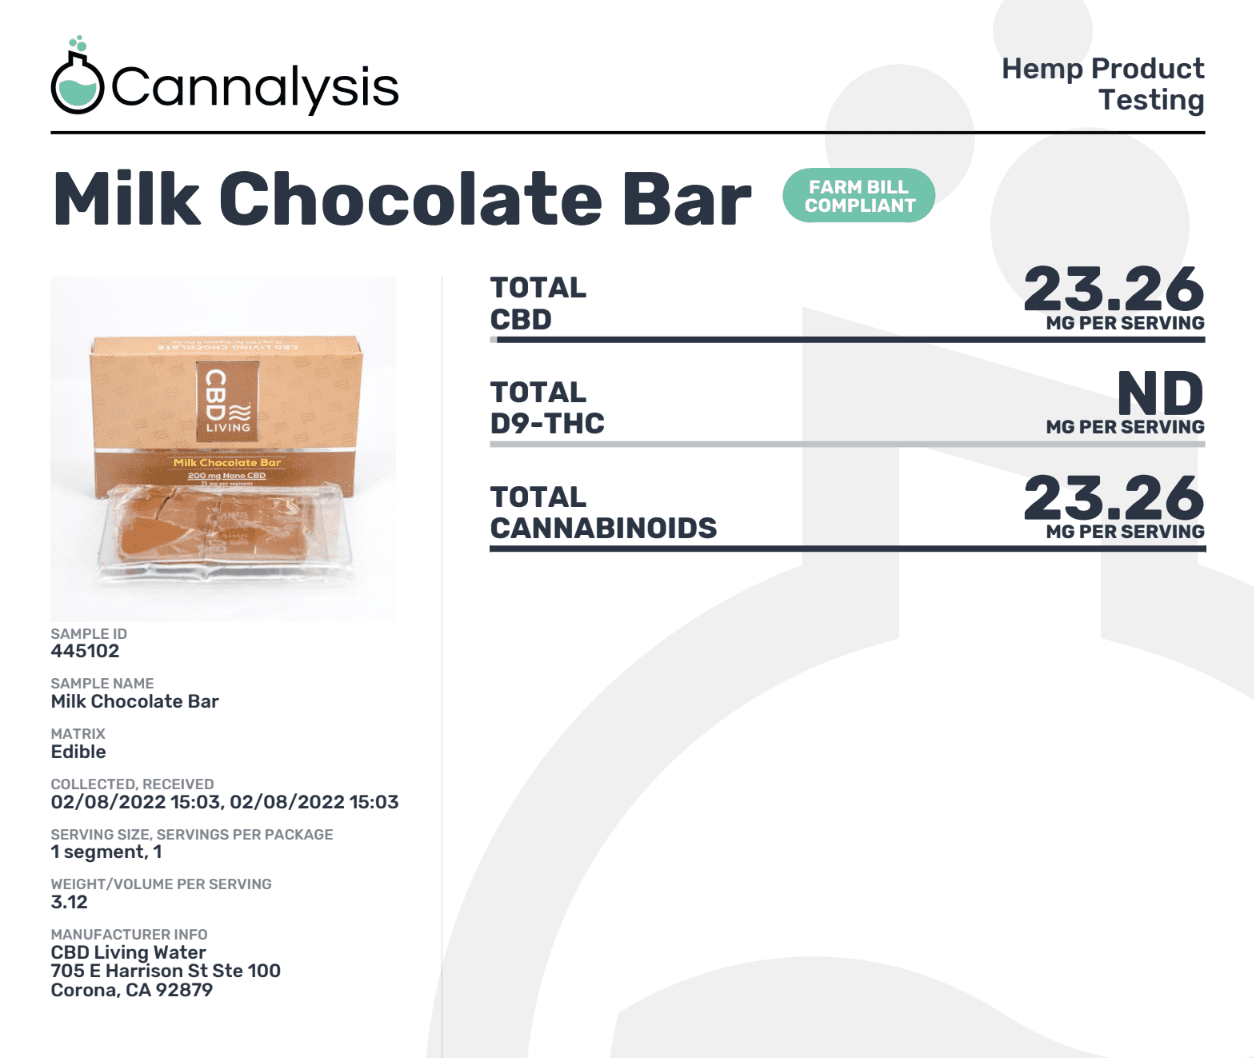 CBD Living Milk Chocolate Bar Product Testing